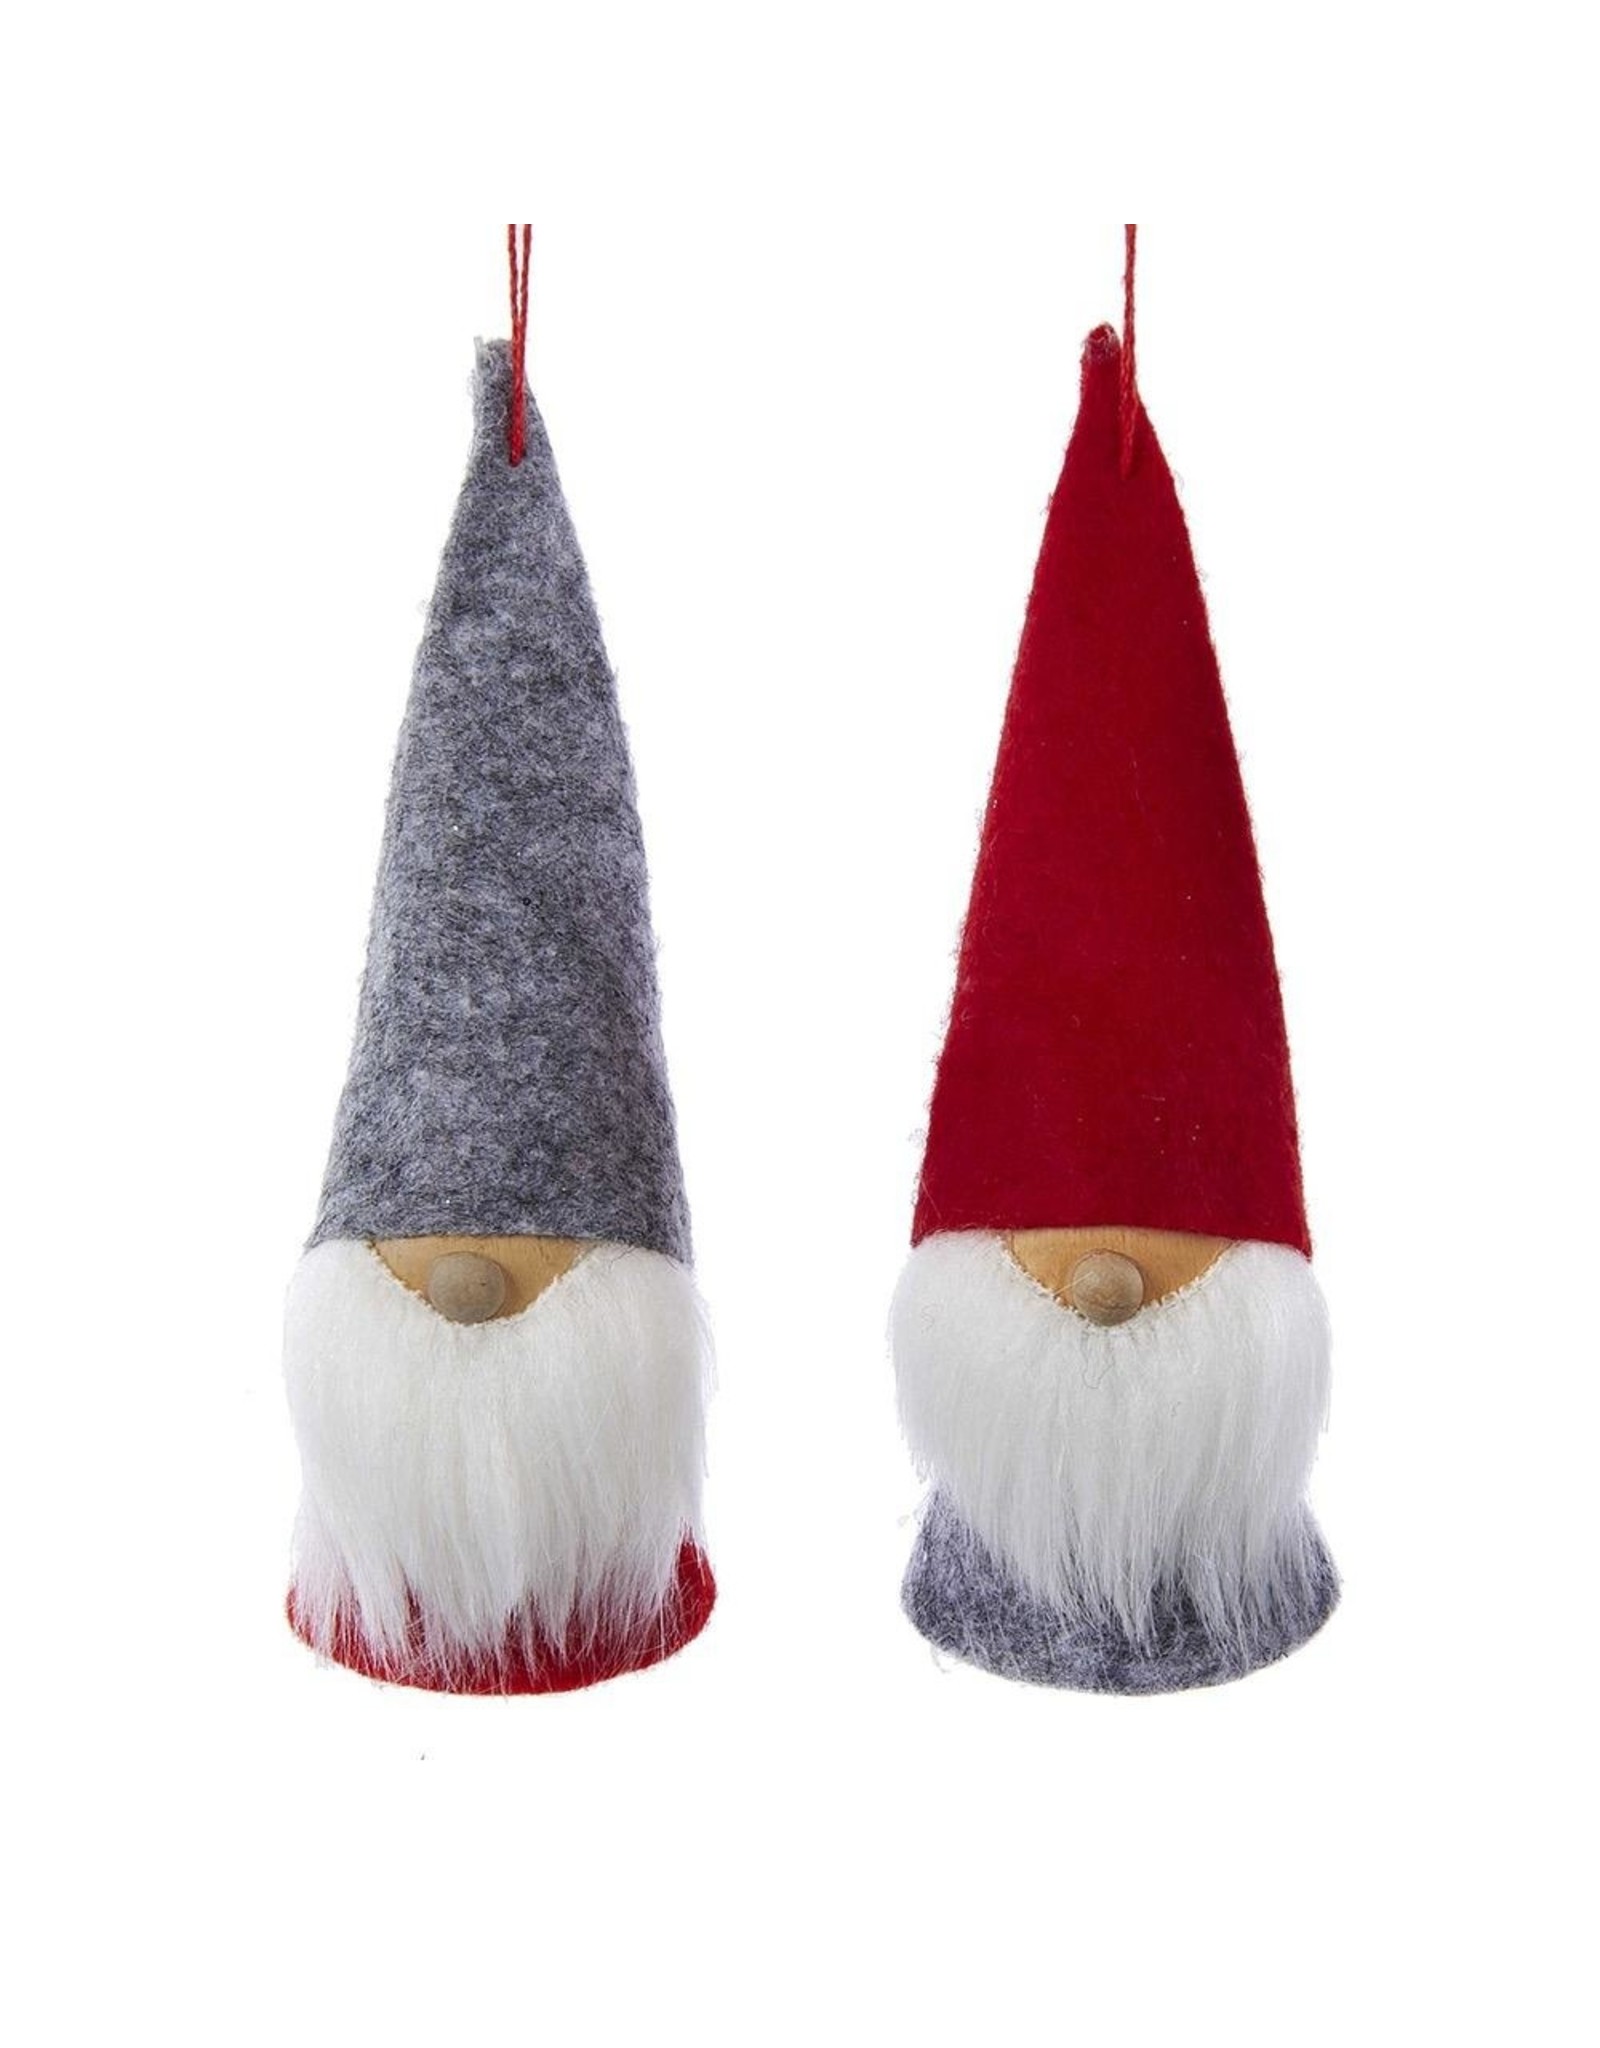 Kurt Adler Gnomes Wood and Felt Dwarf Gnome Ornaments 5 Inch Set of 2